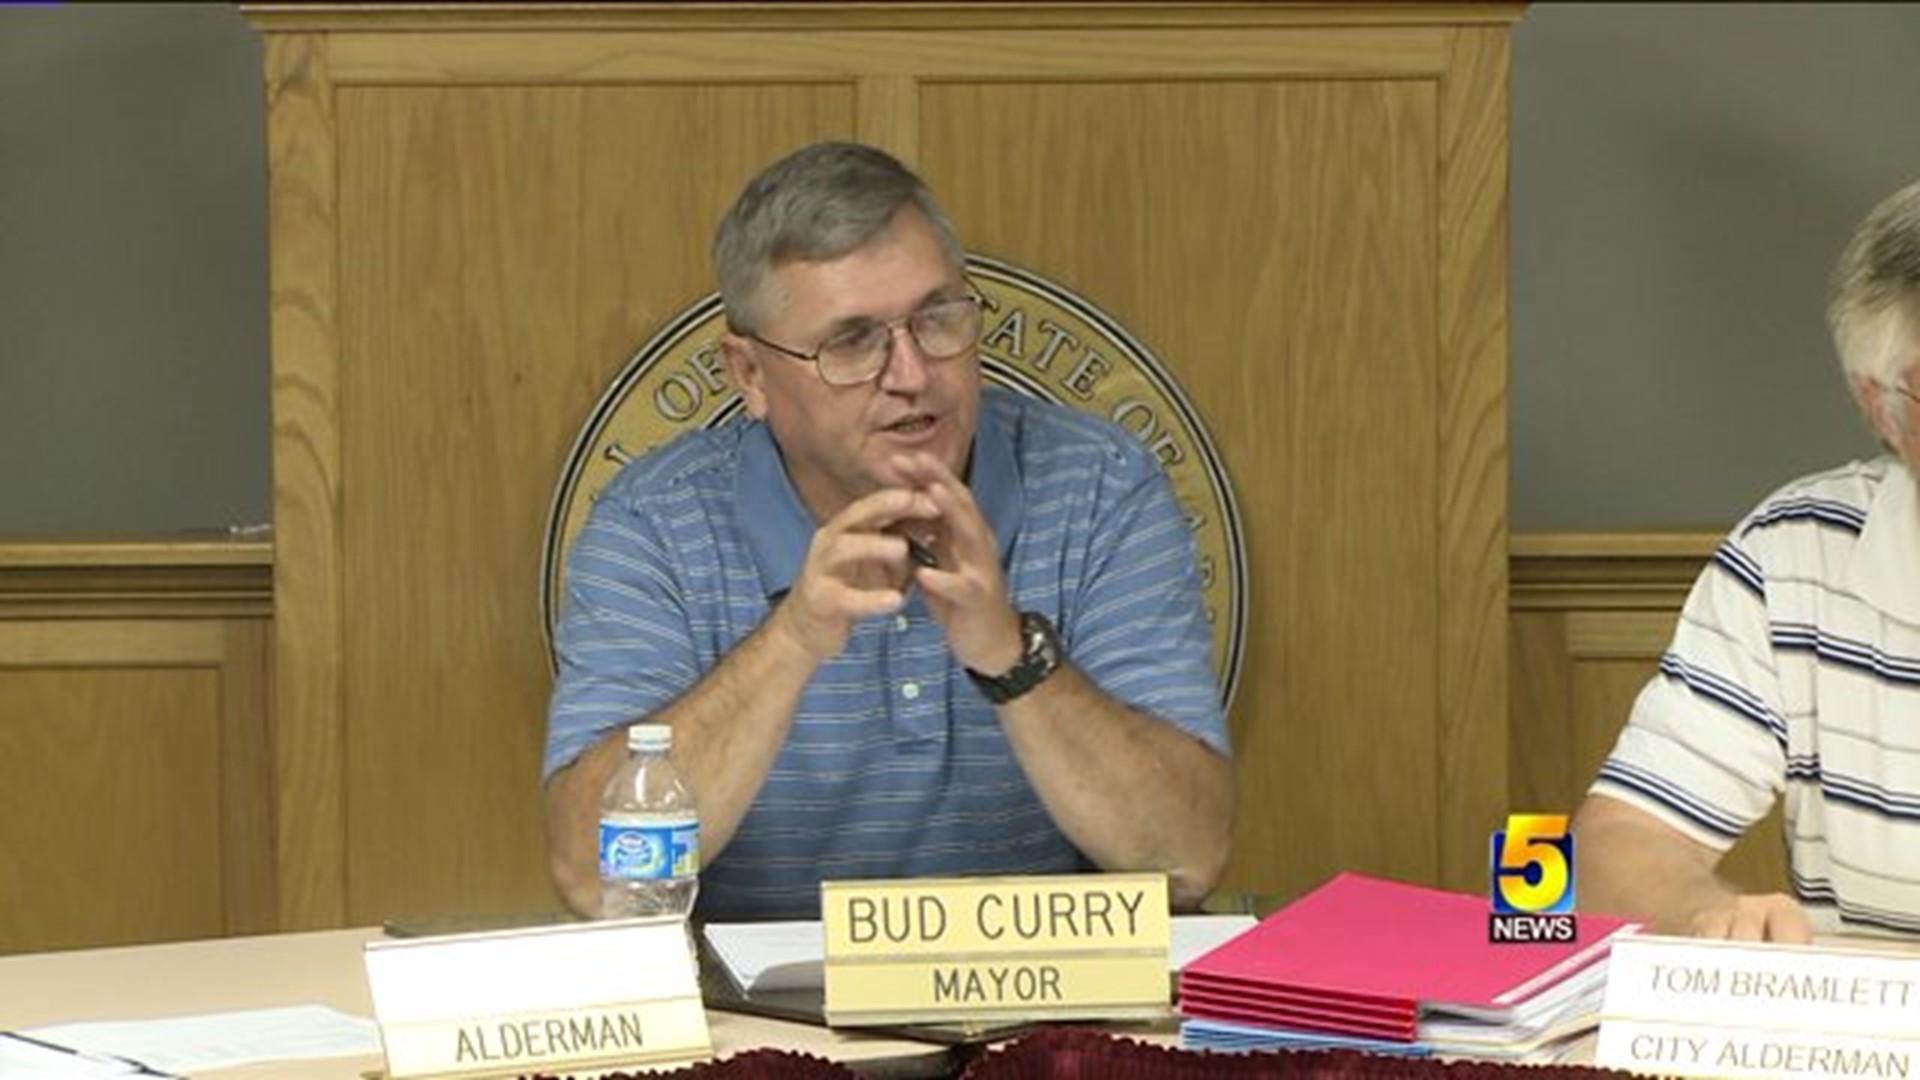 Johnson Mayor Buddy Curry Investigated